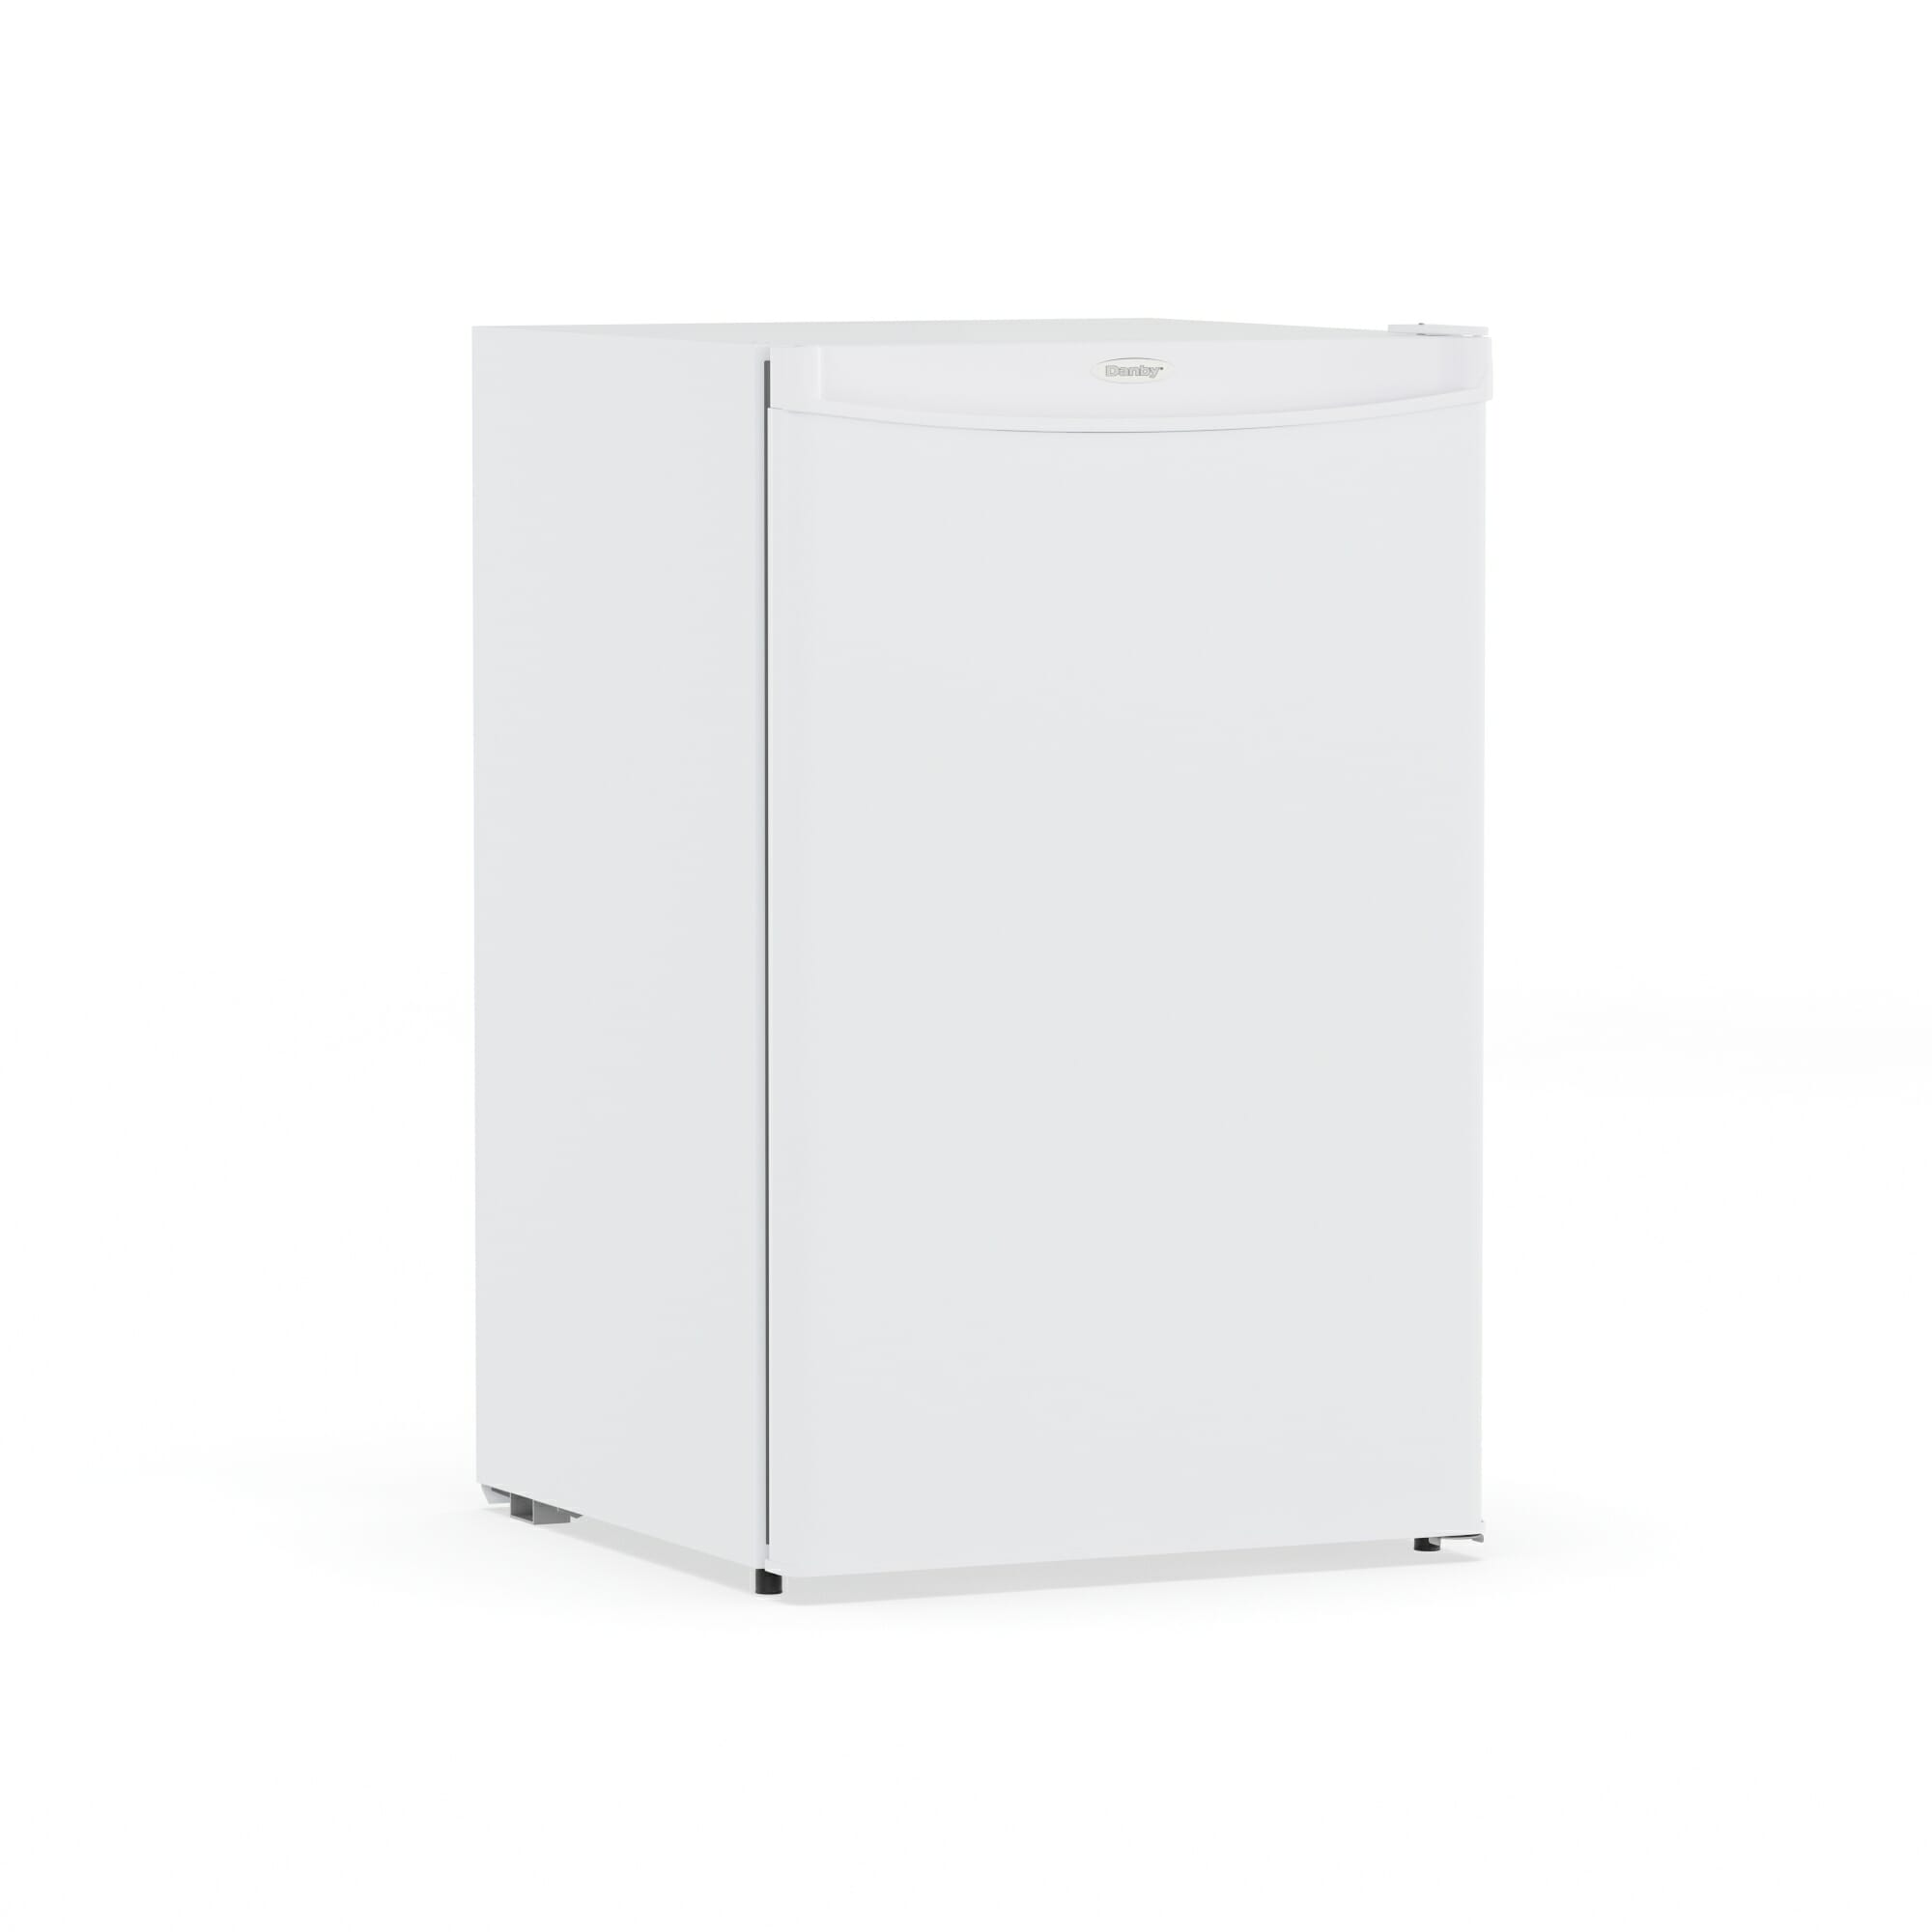 Danby 3.2 cu. ft. Upright Freezer in White